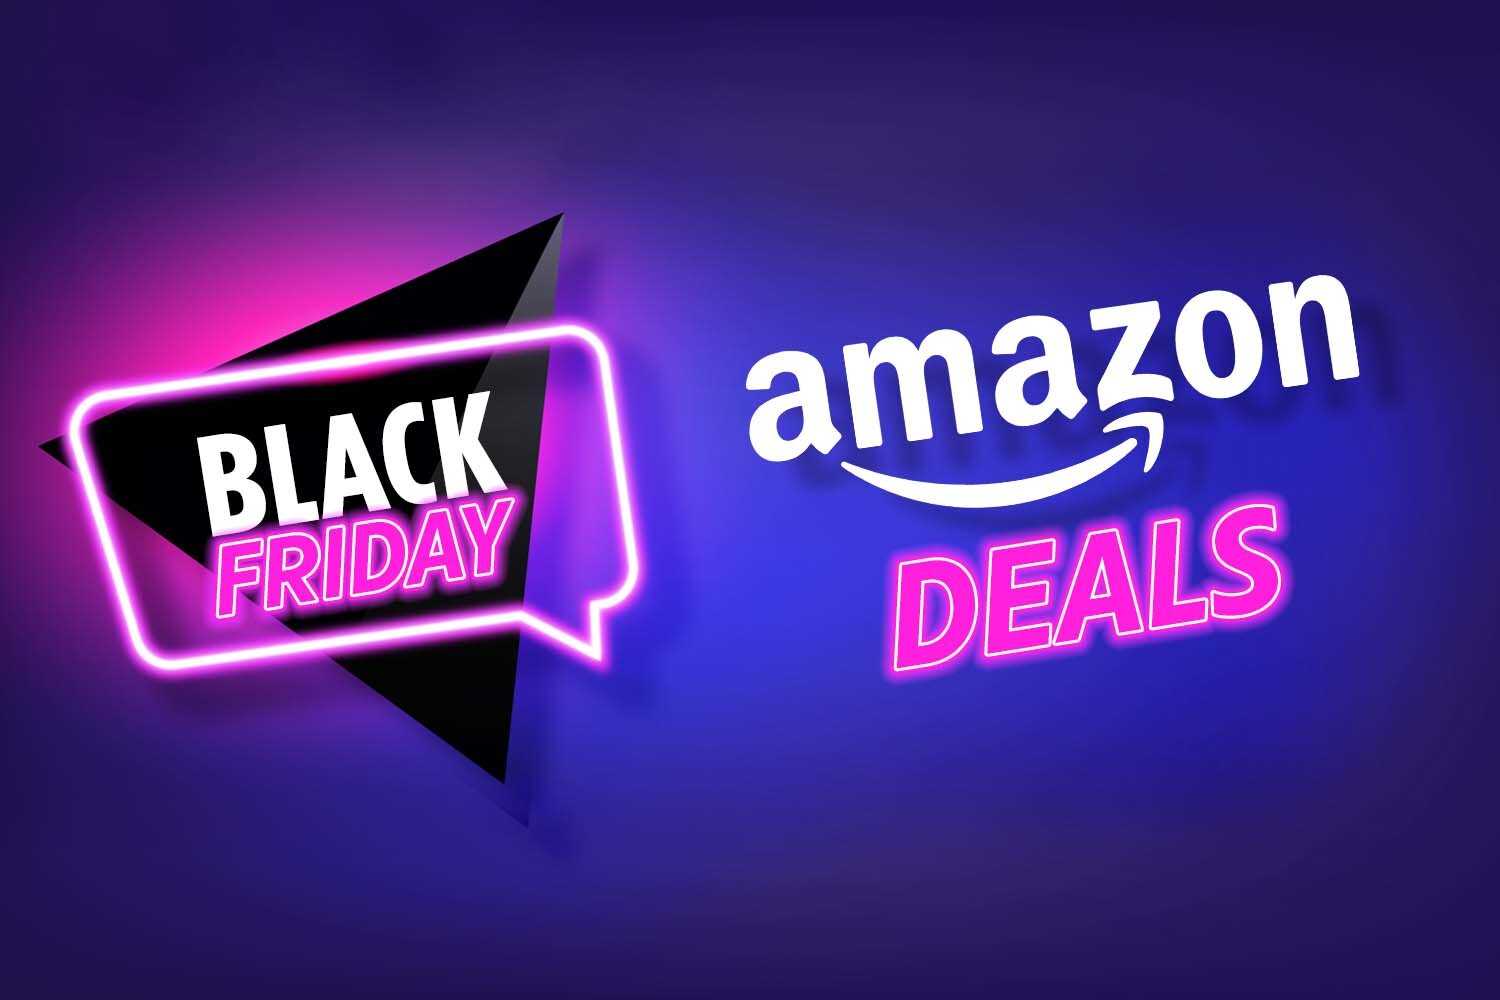 Amazon Black Friday Lightning Deals Calendar